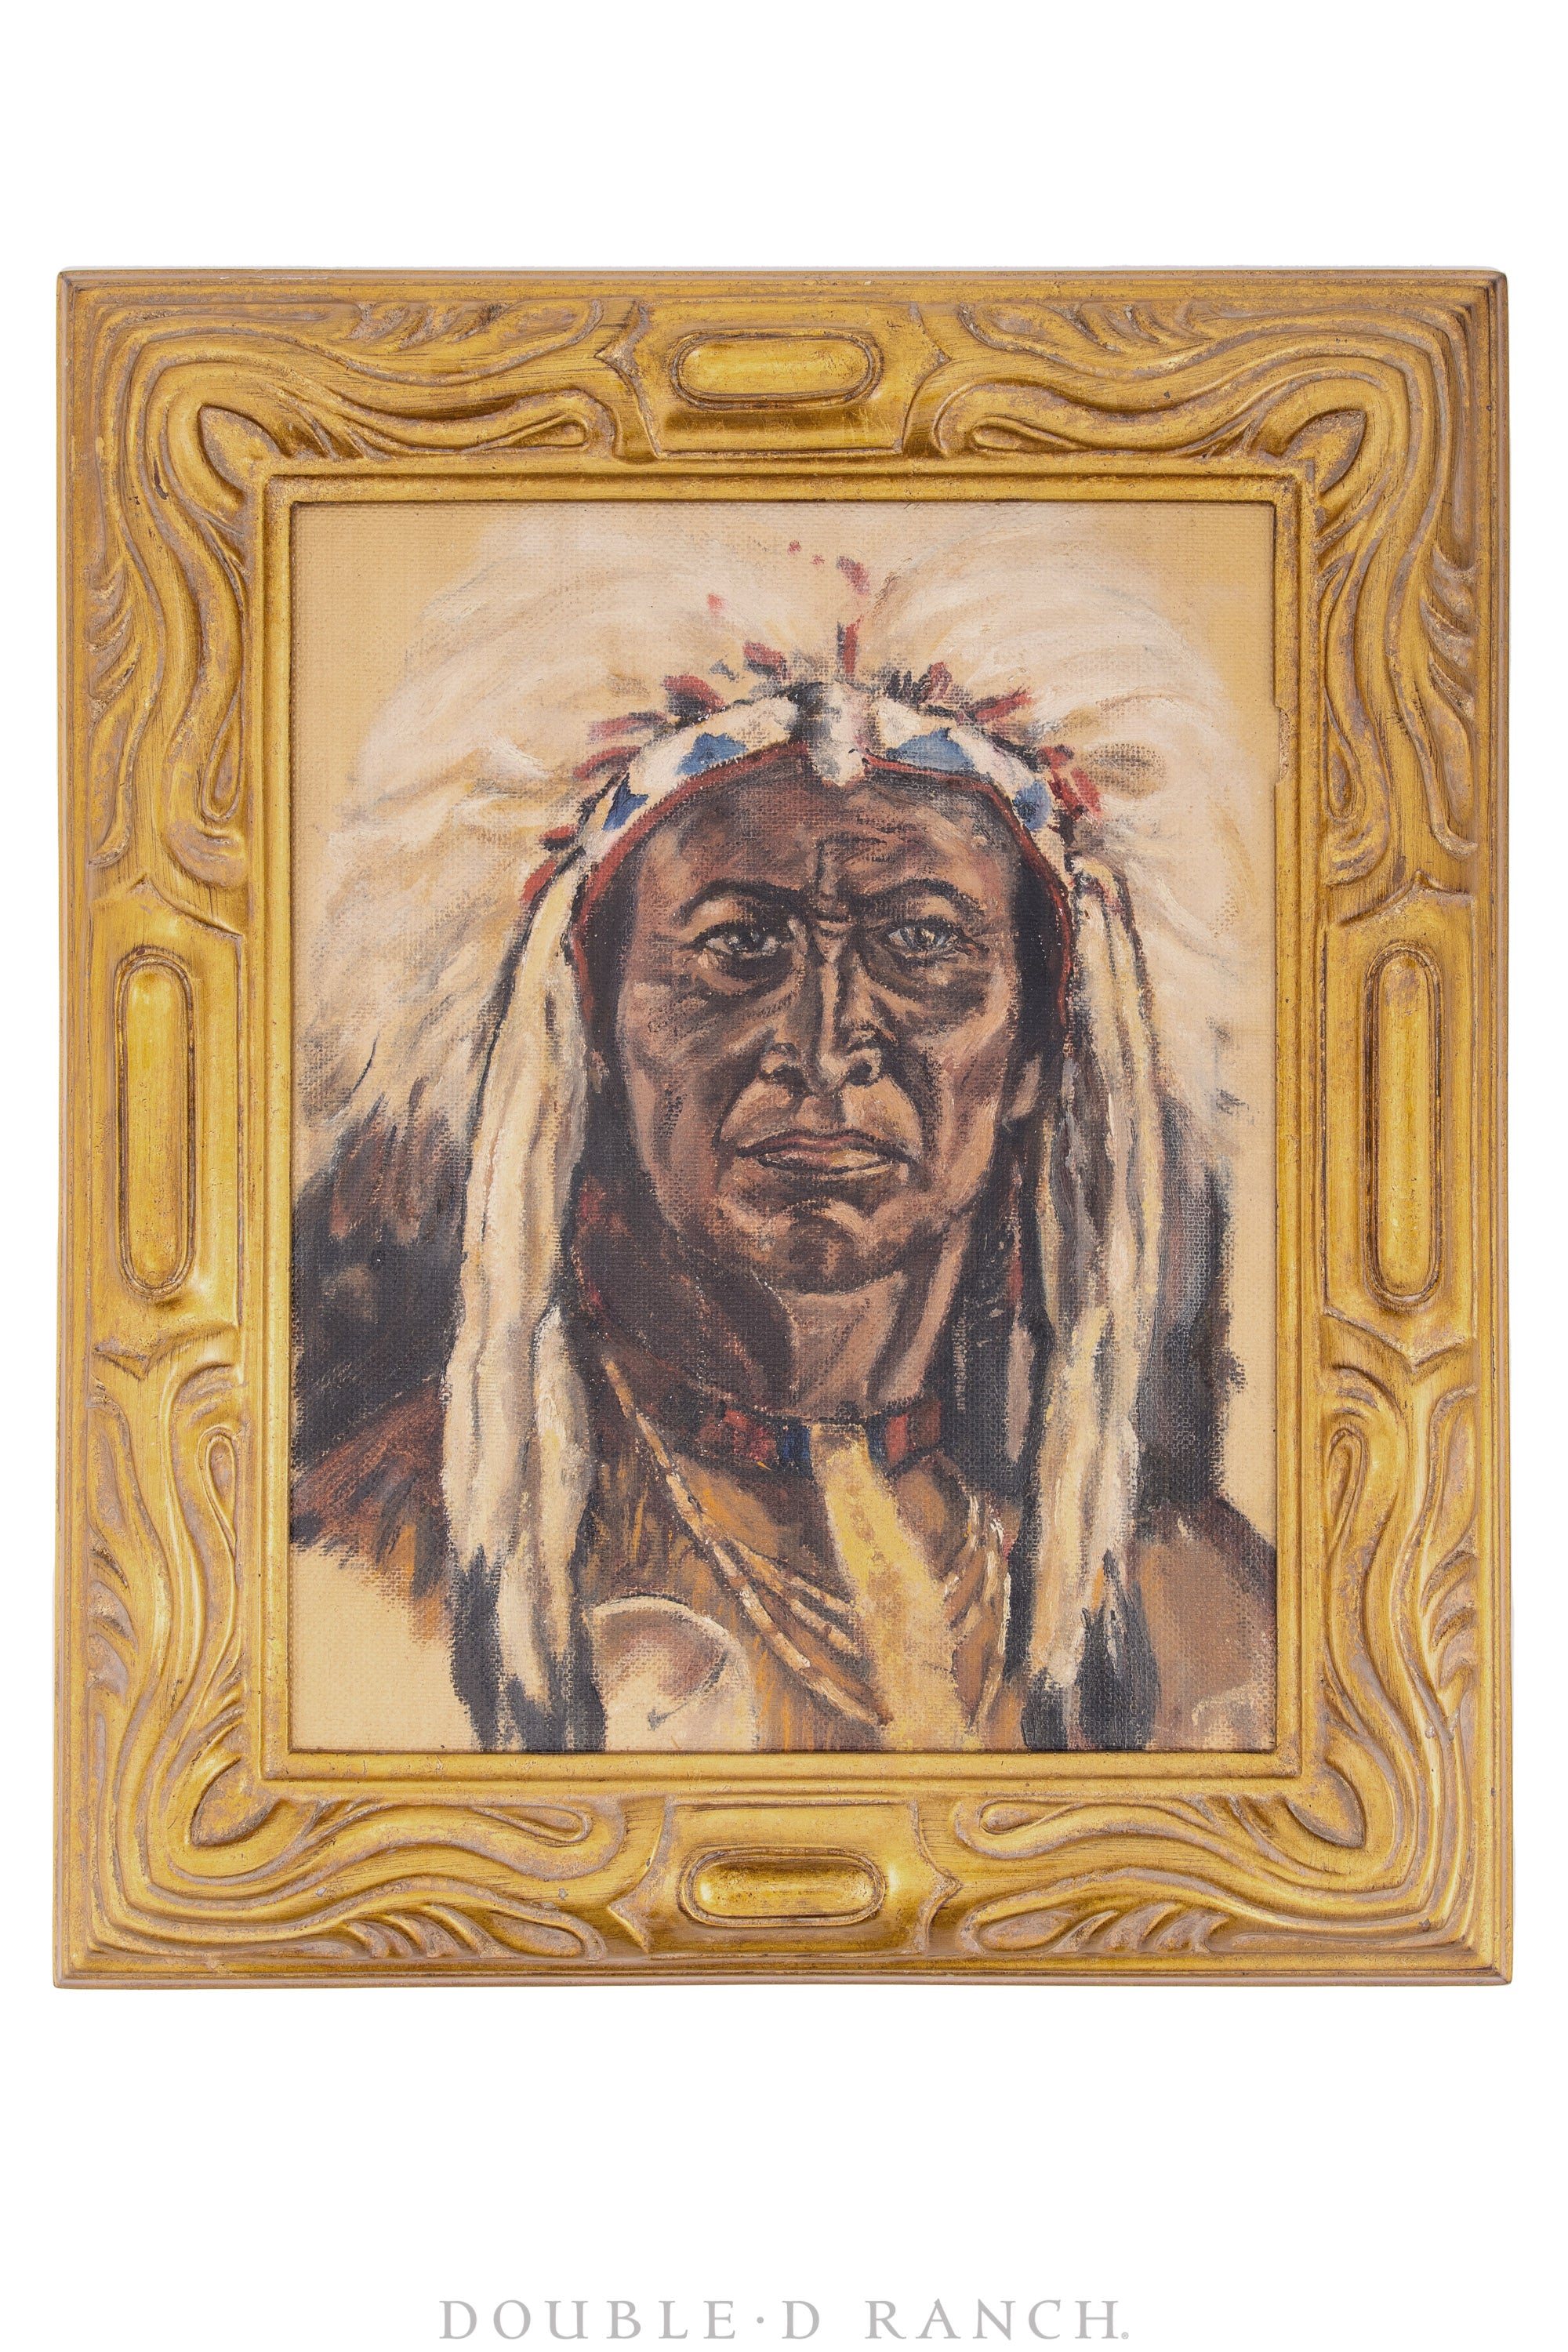 Art, Portrait, Oil on Board, Native American Warrior, Handmade Frames, Unsigned, Vintage, 1125